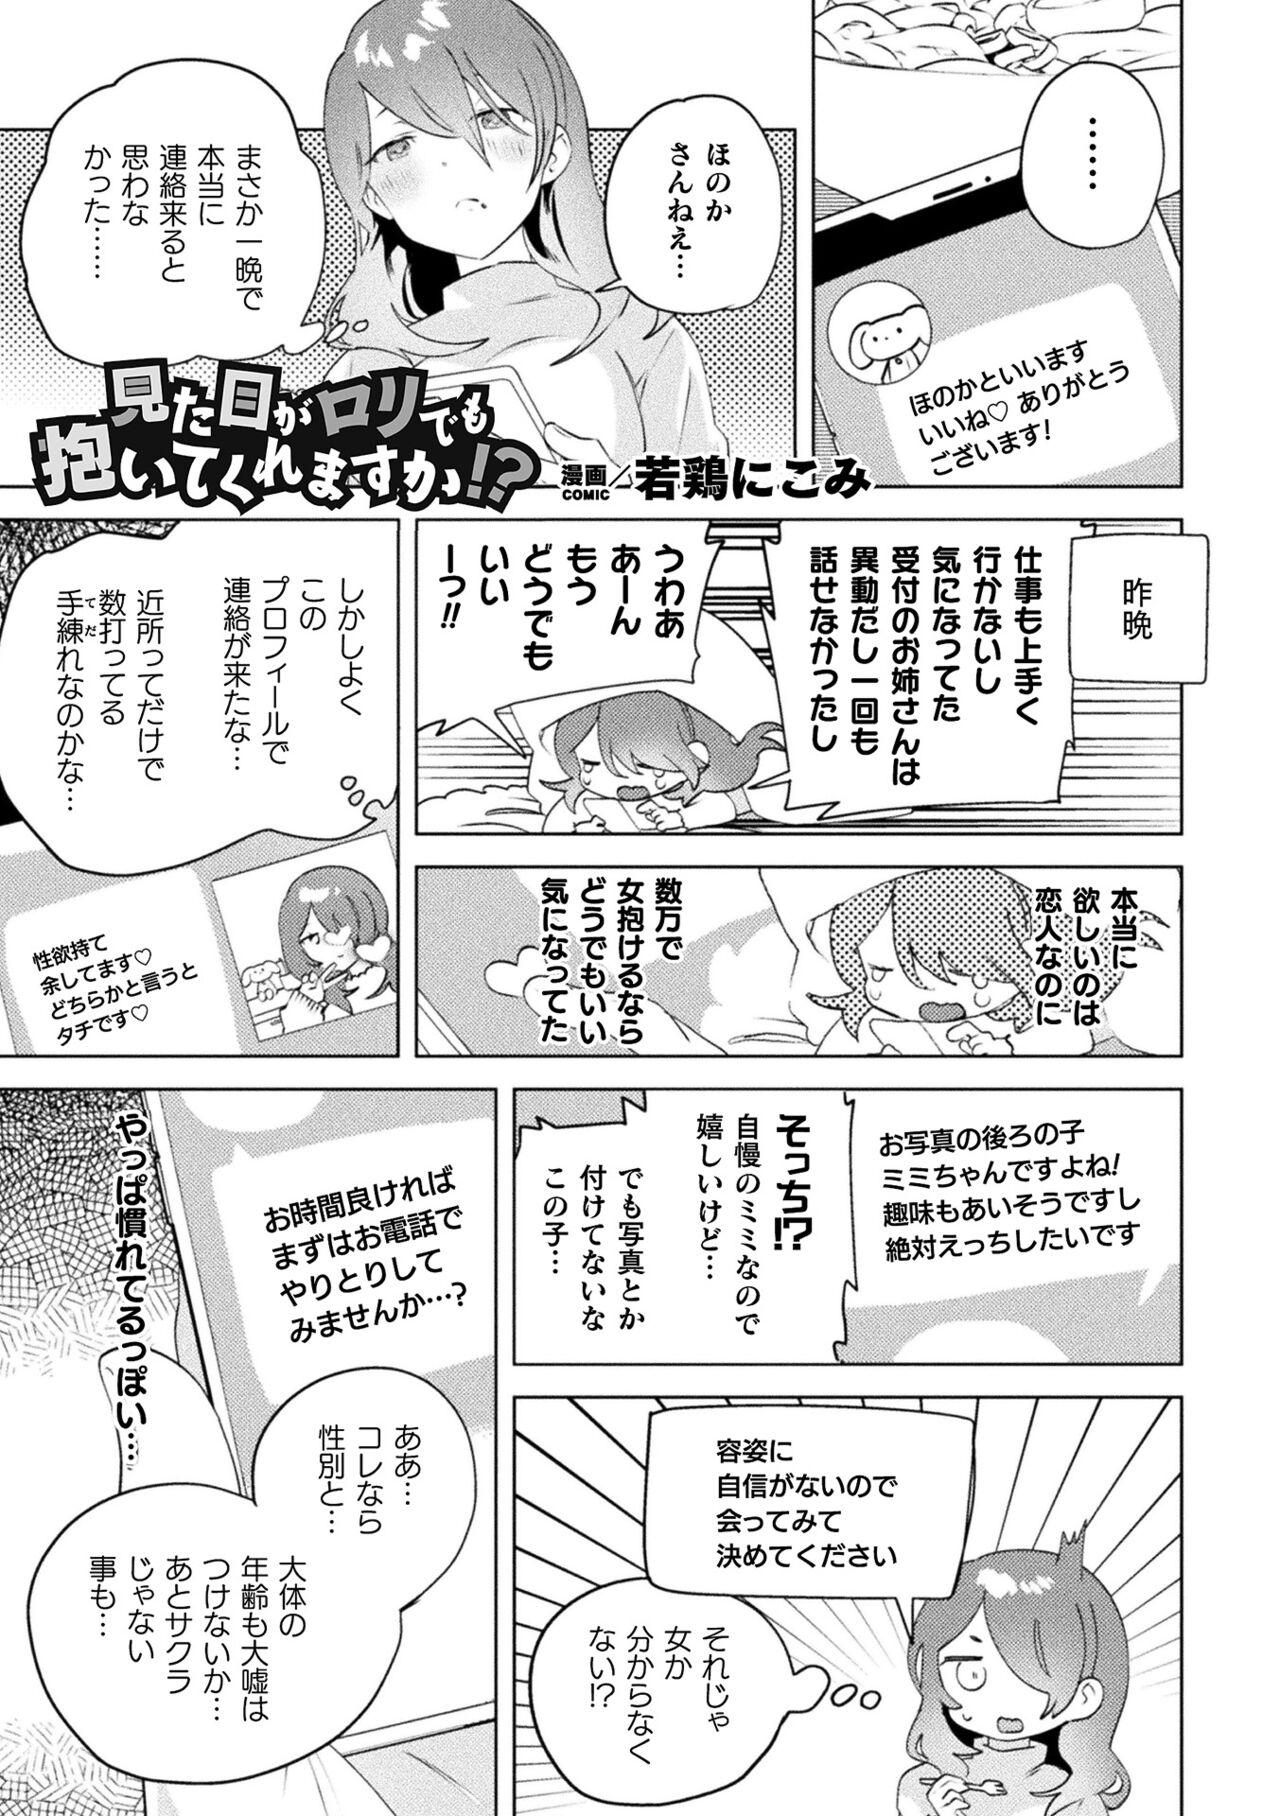 2D Comic Magazine Mamakatsu Yuri Ecchi Vol. 3 2